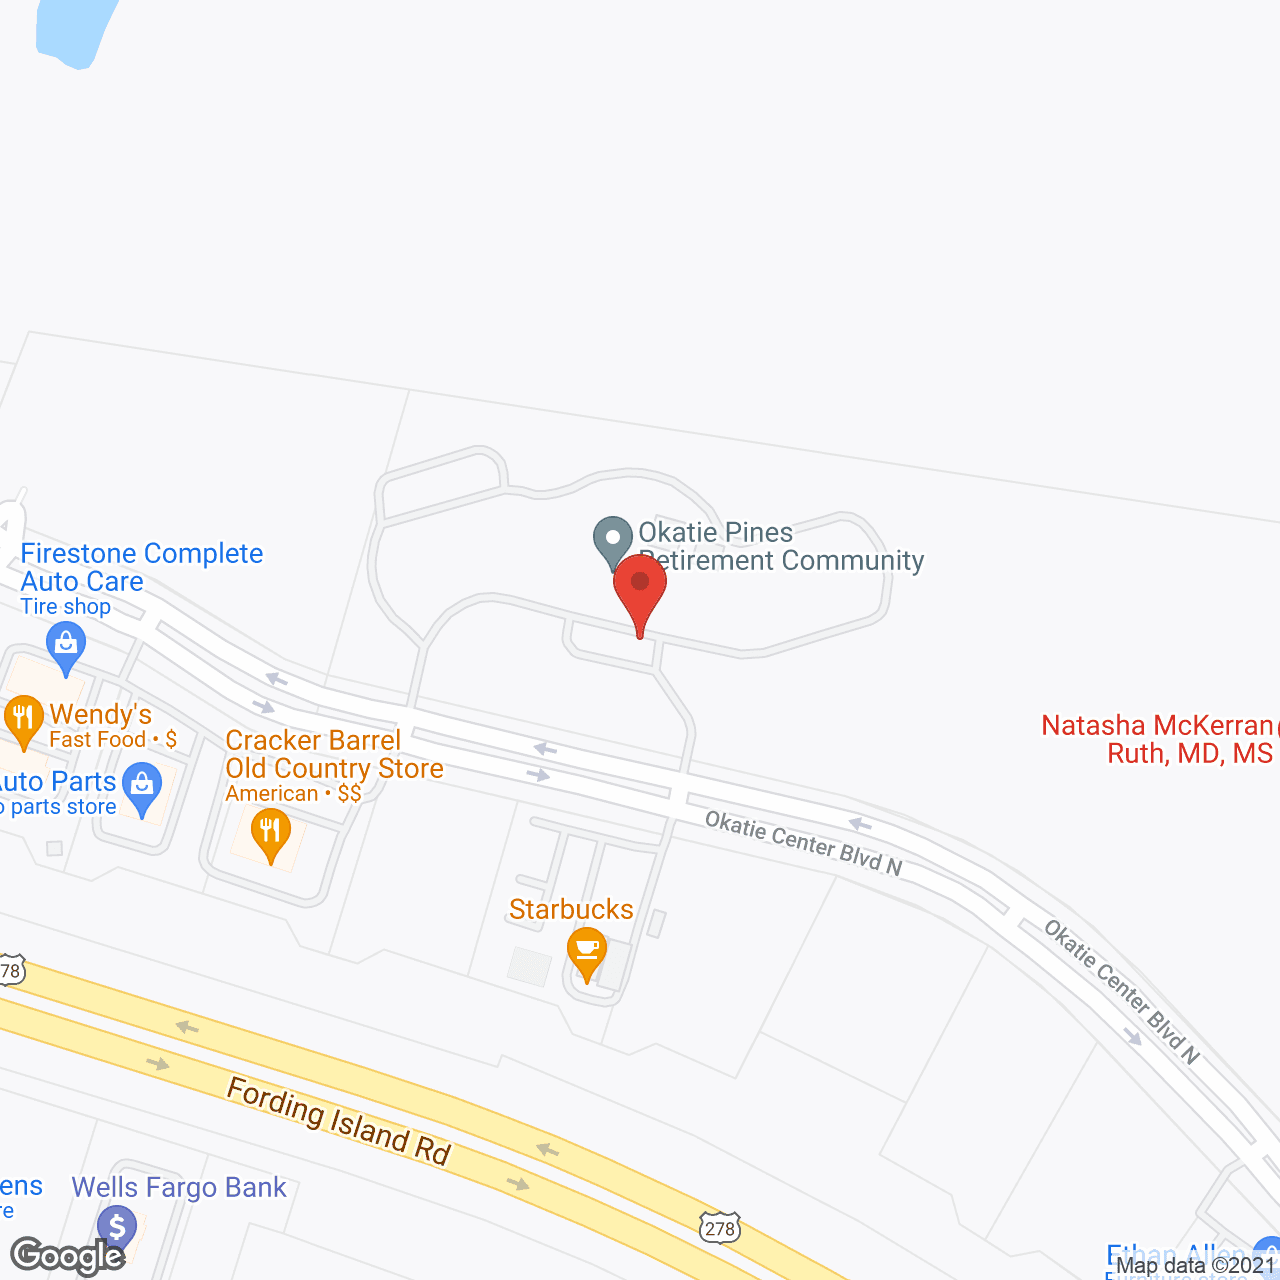 Okatie Pines Retirement Community in google map